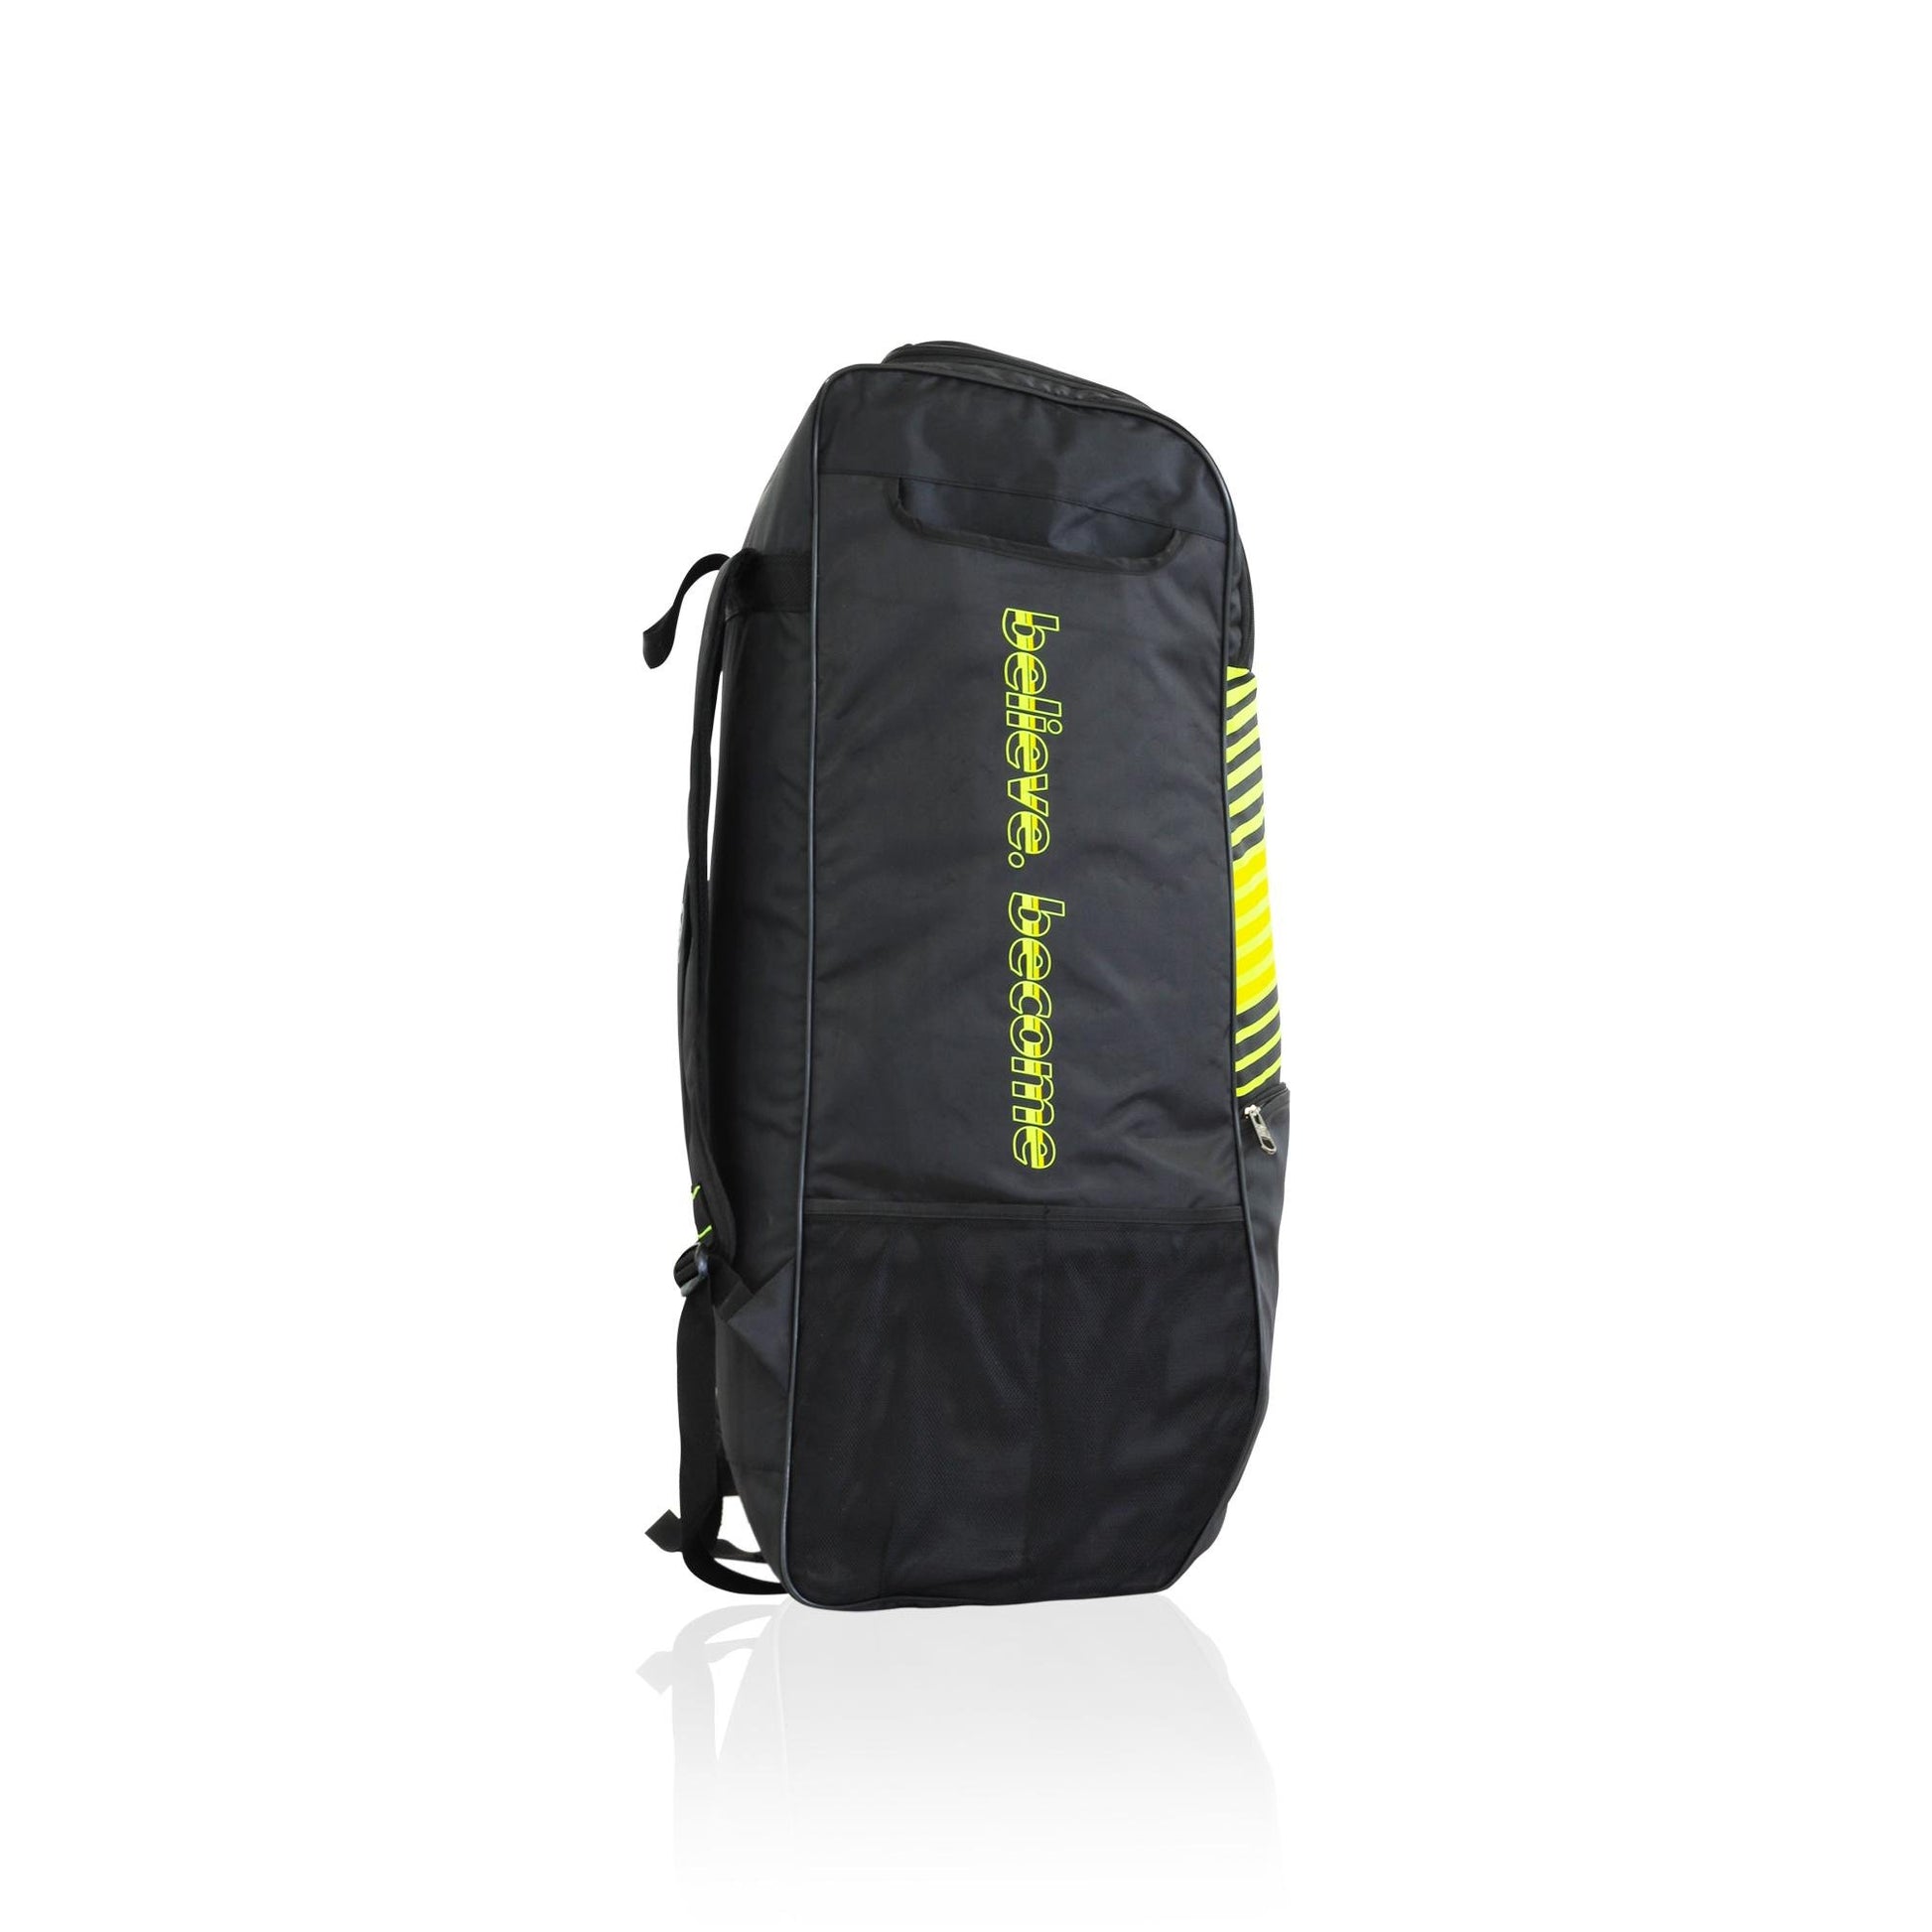 Kit Bag SG COMFIPAK 1.0 DUFFLE Black/F.Yellow